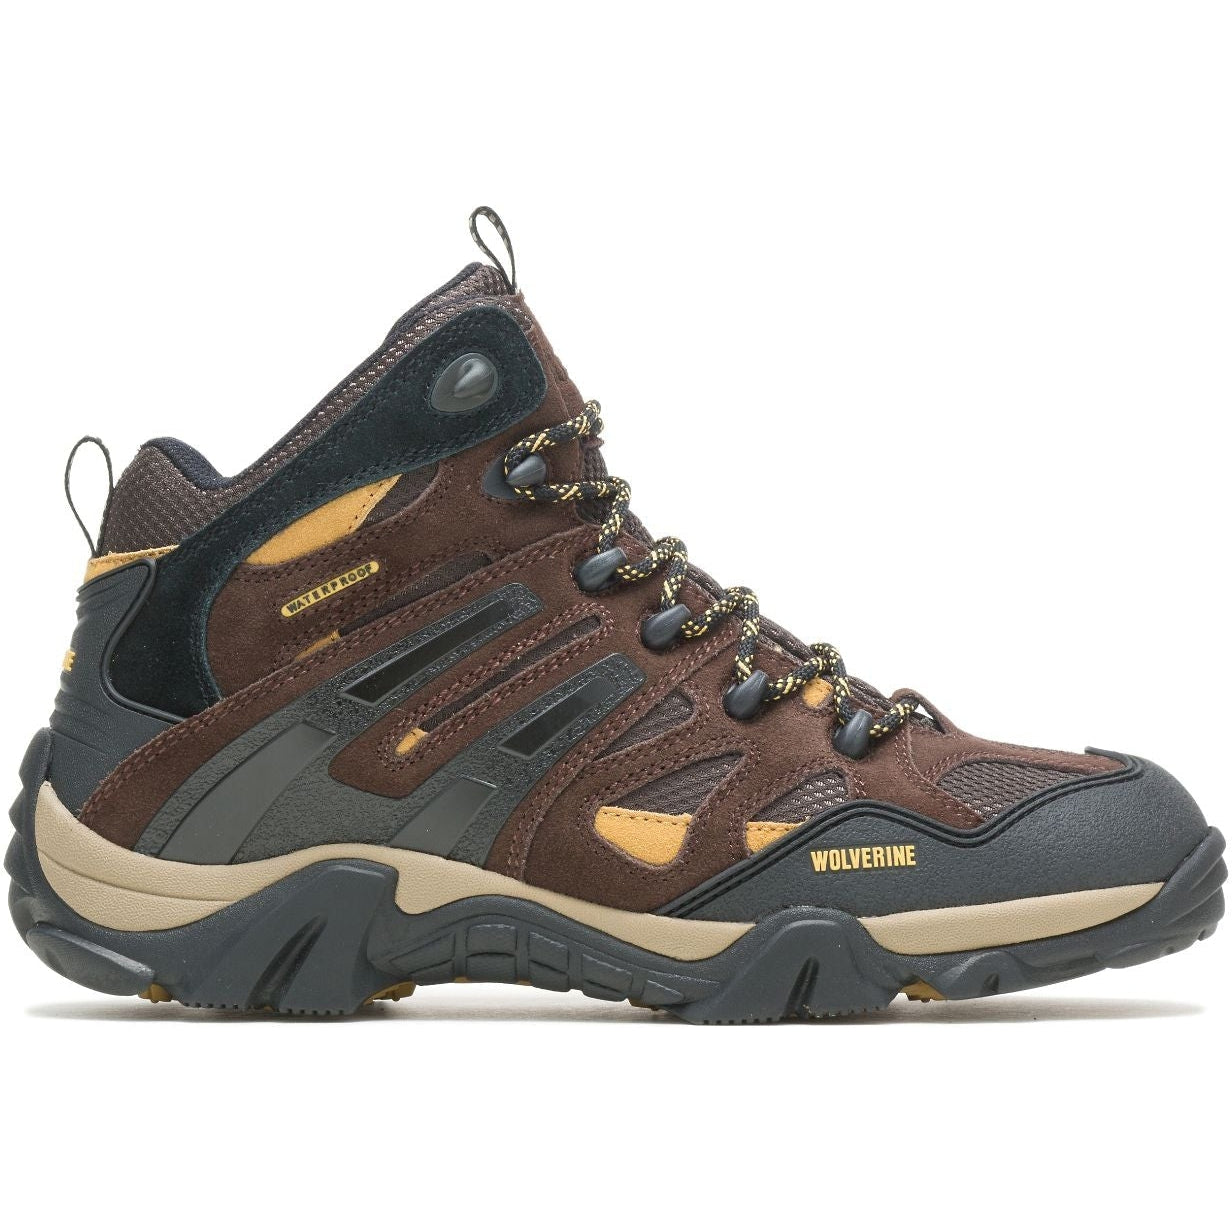 Wolverine Men's Wilderness Soft Toe Boot - Chocolate Brown - W880231 7 / Medium / Brown - Overlook Boots